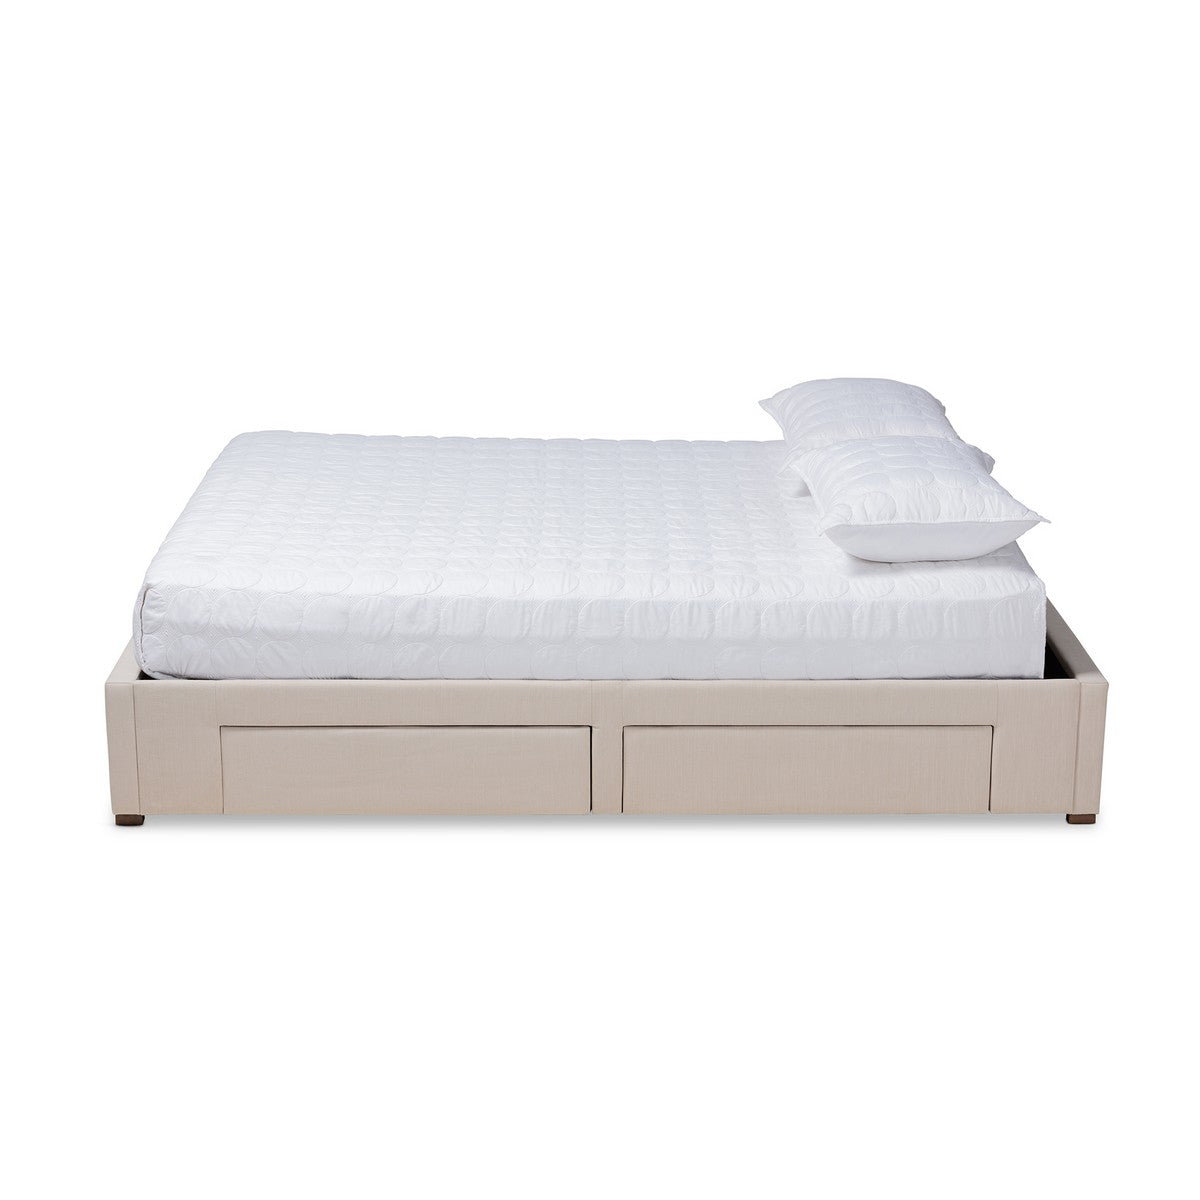 Baxton Studio Leni Modern and Contemporary Beige Fabric Upholstered 4-Drawer King Size Platform Storage Bed Frame